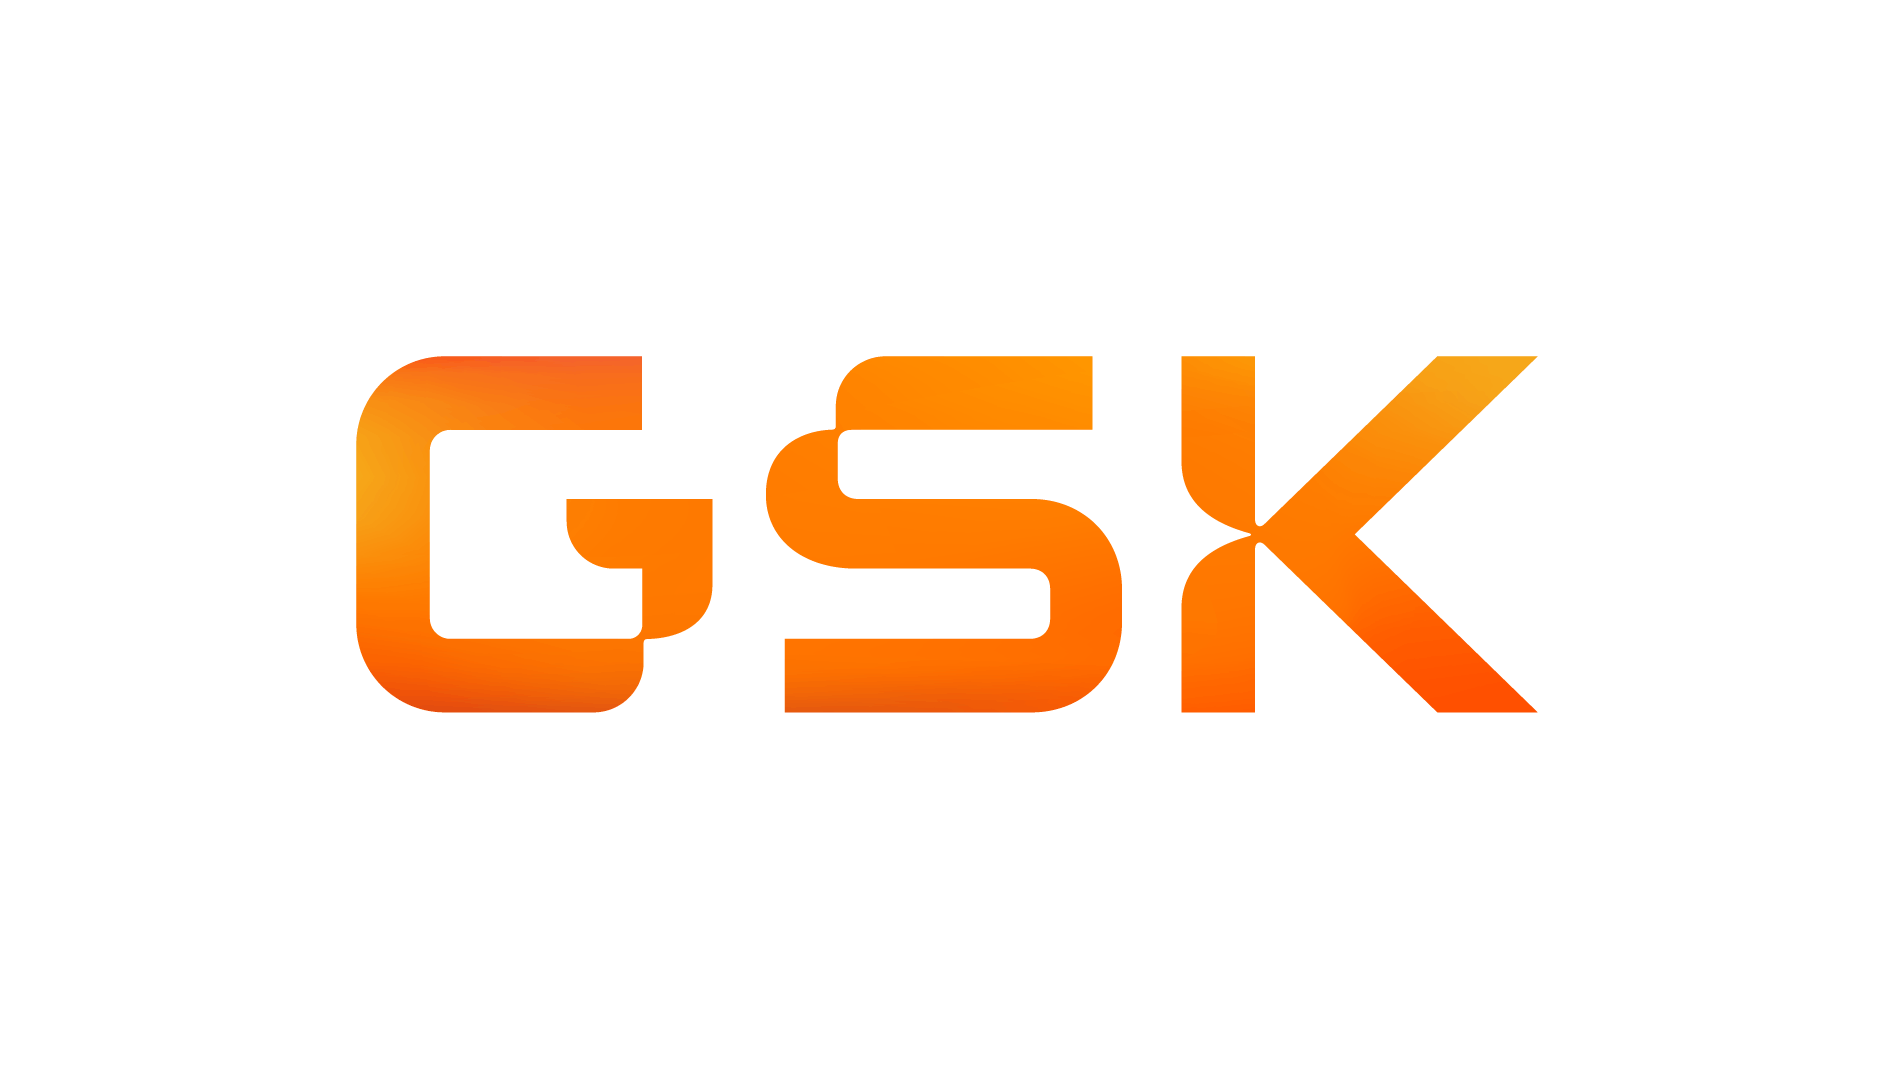 Go to GSK site